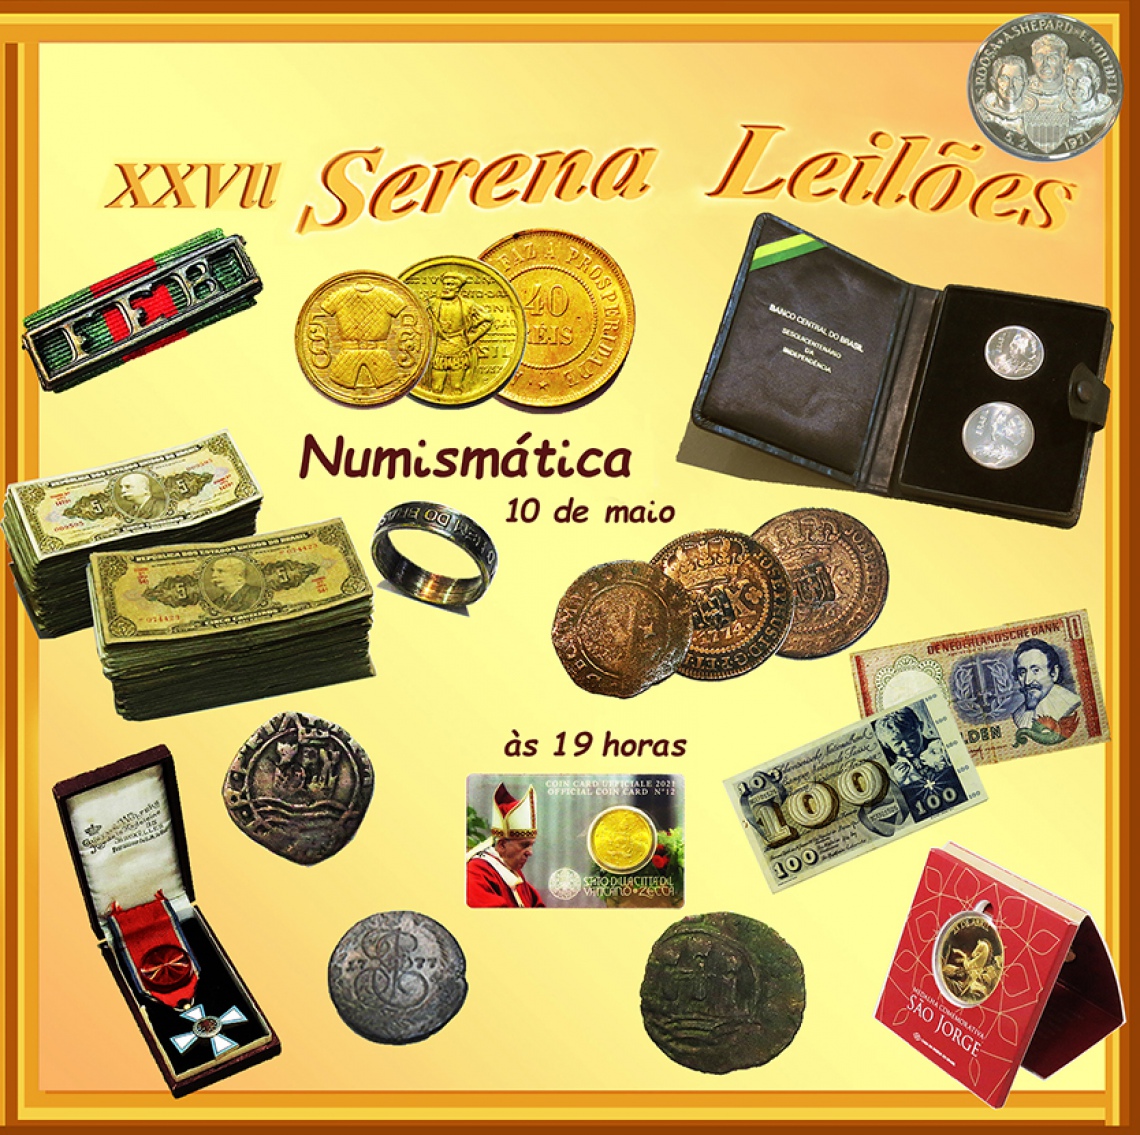 Serena Leilões XXVII - Numismática